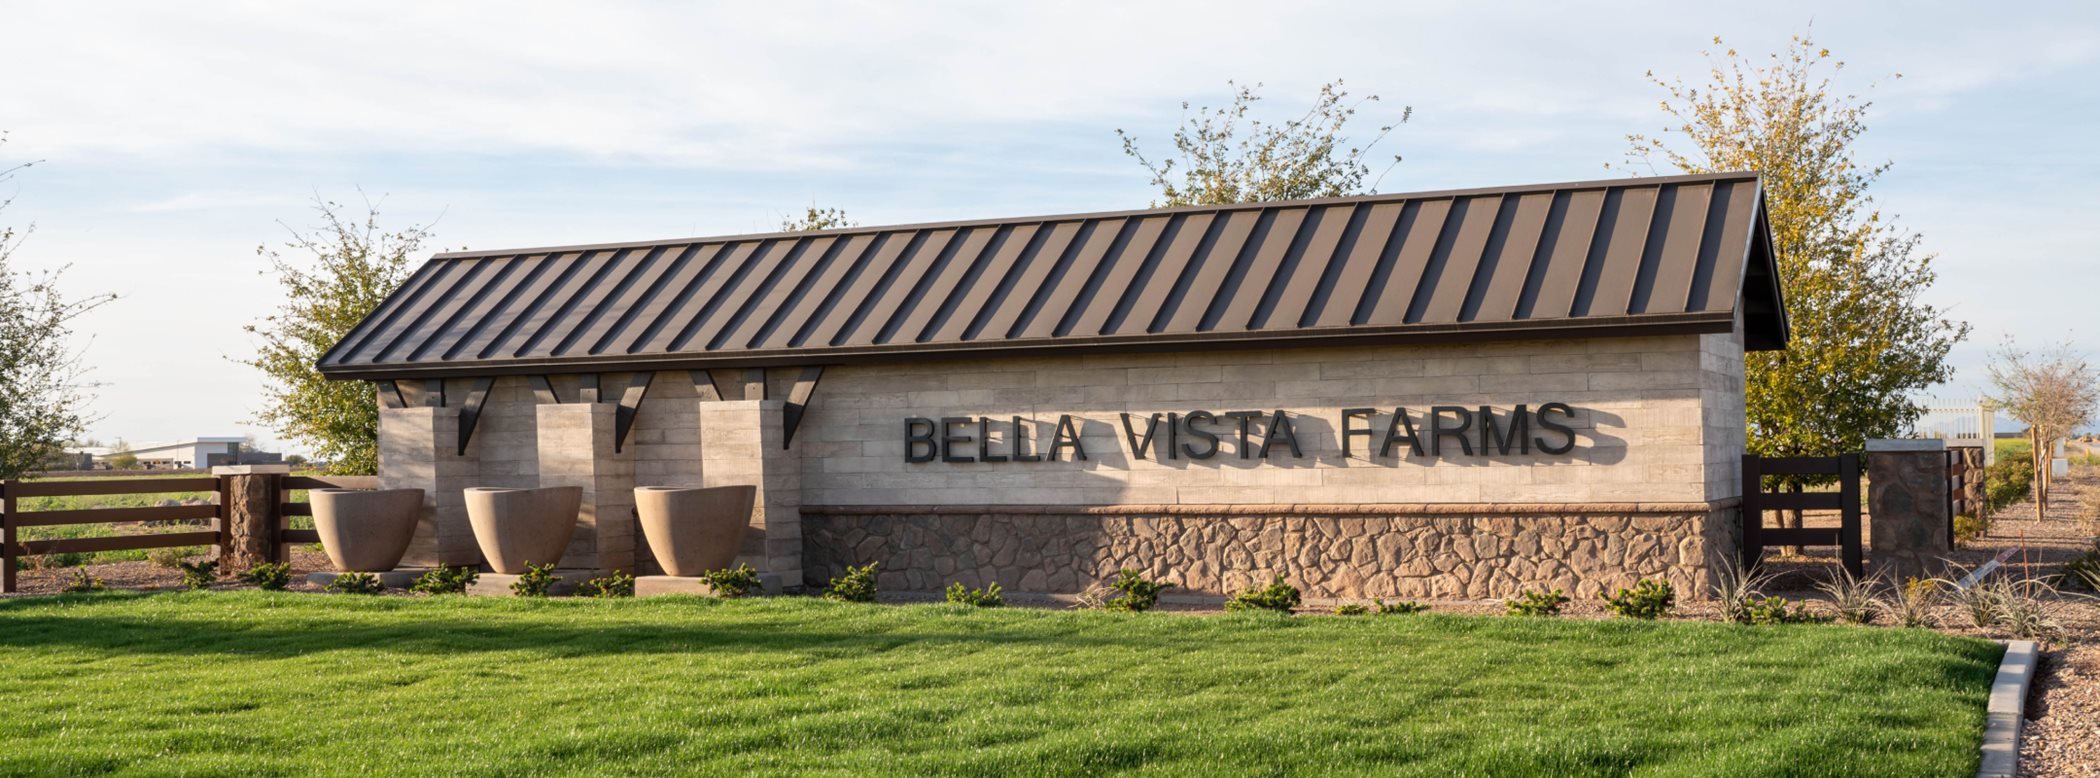 Bella Vista Farms monument sign